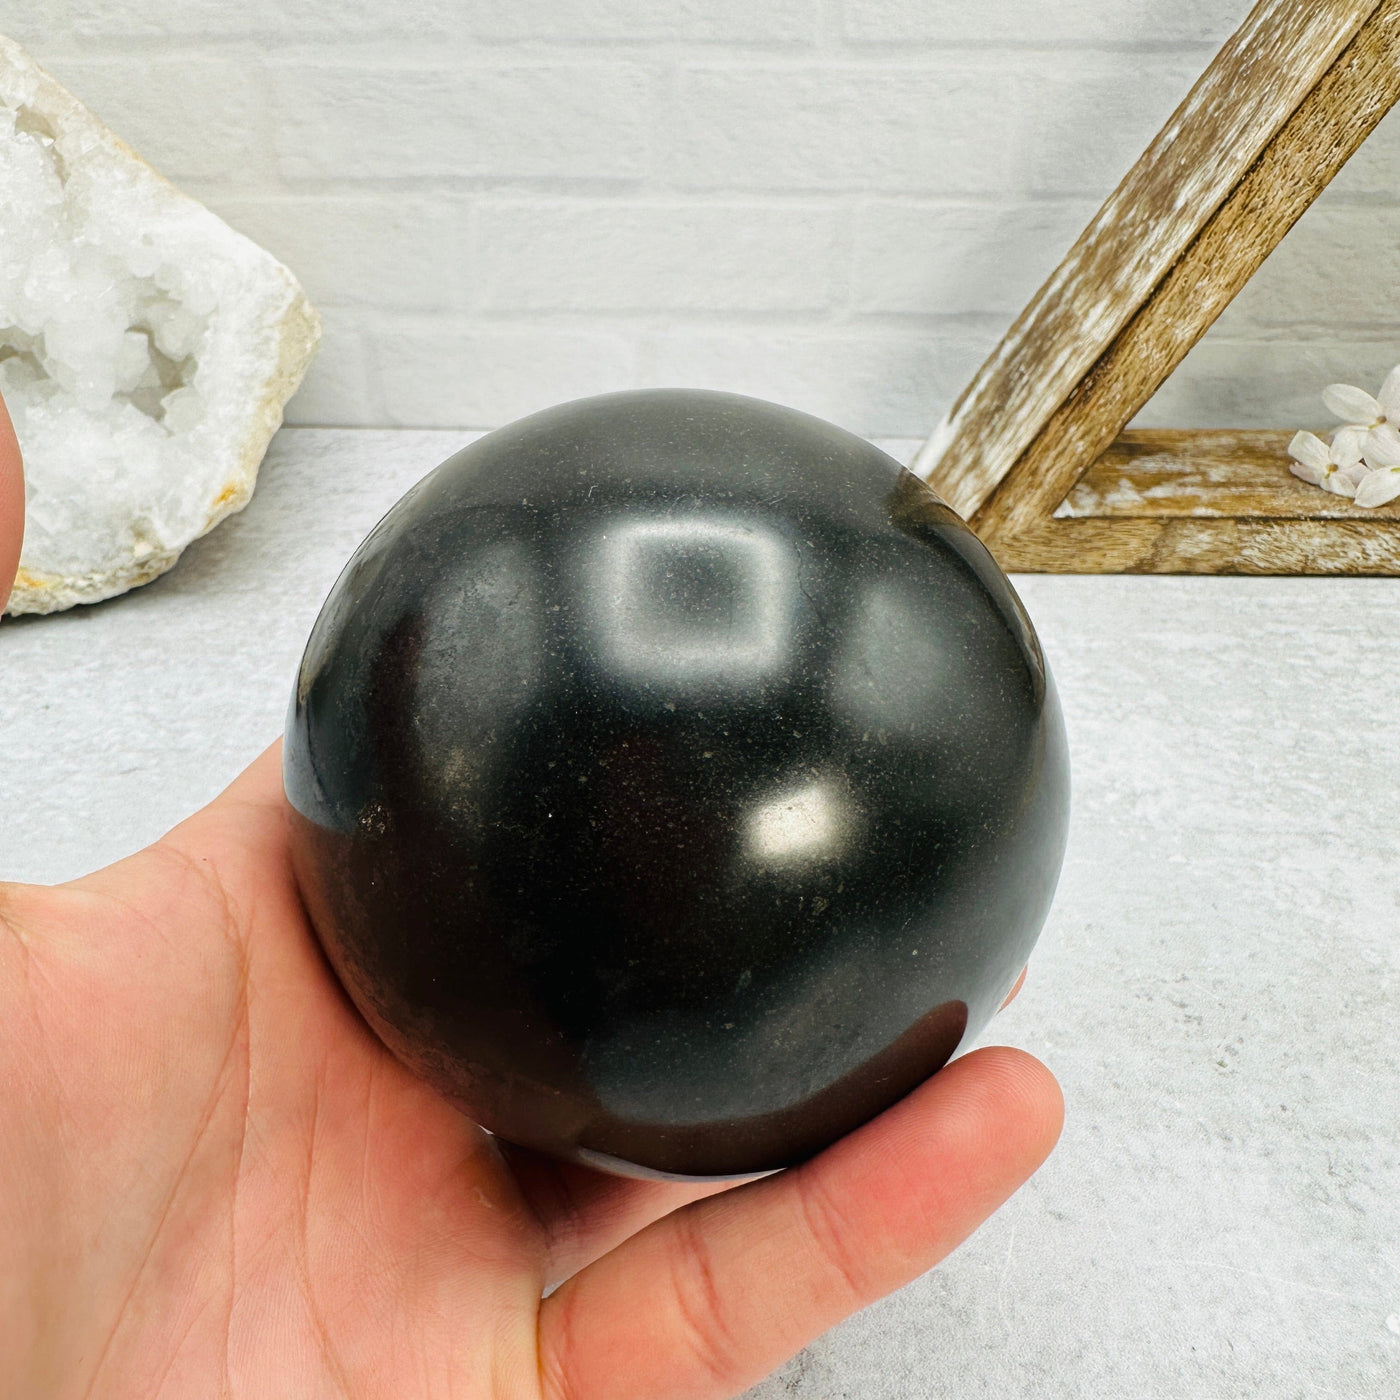  Black Tourmaline Spheres - OOAK - with hand